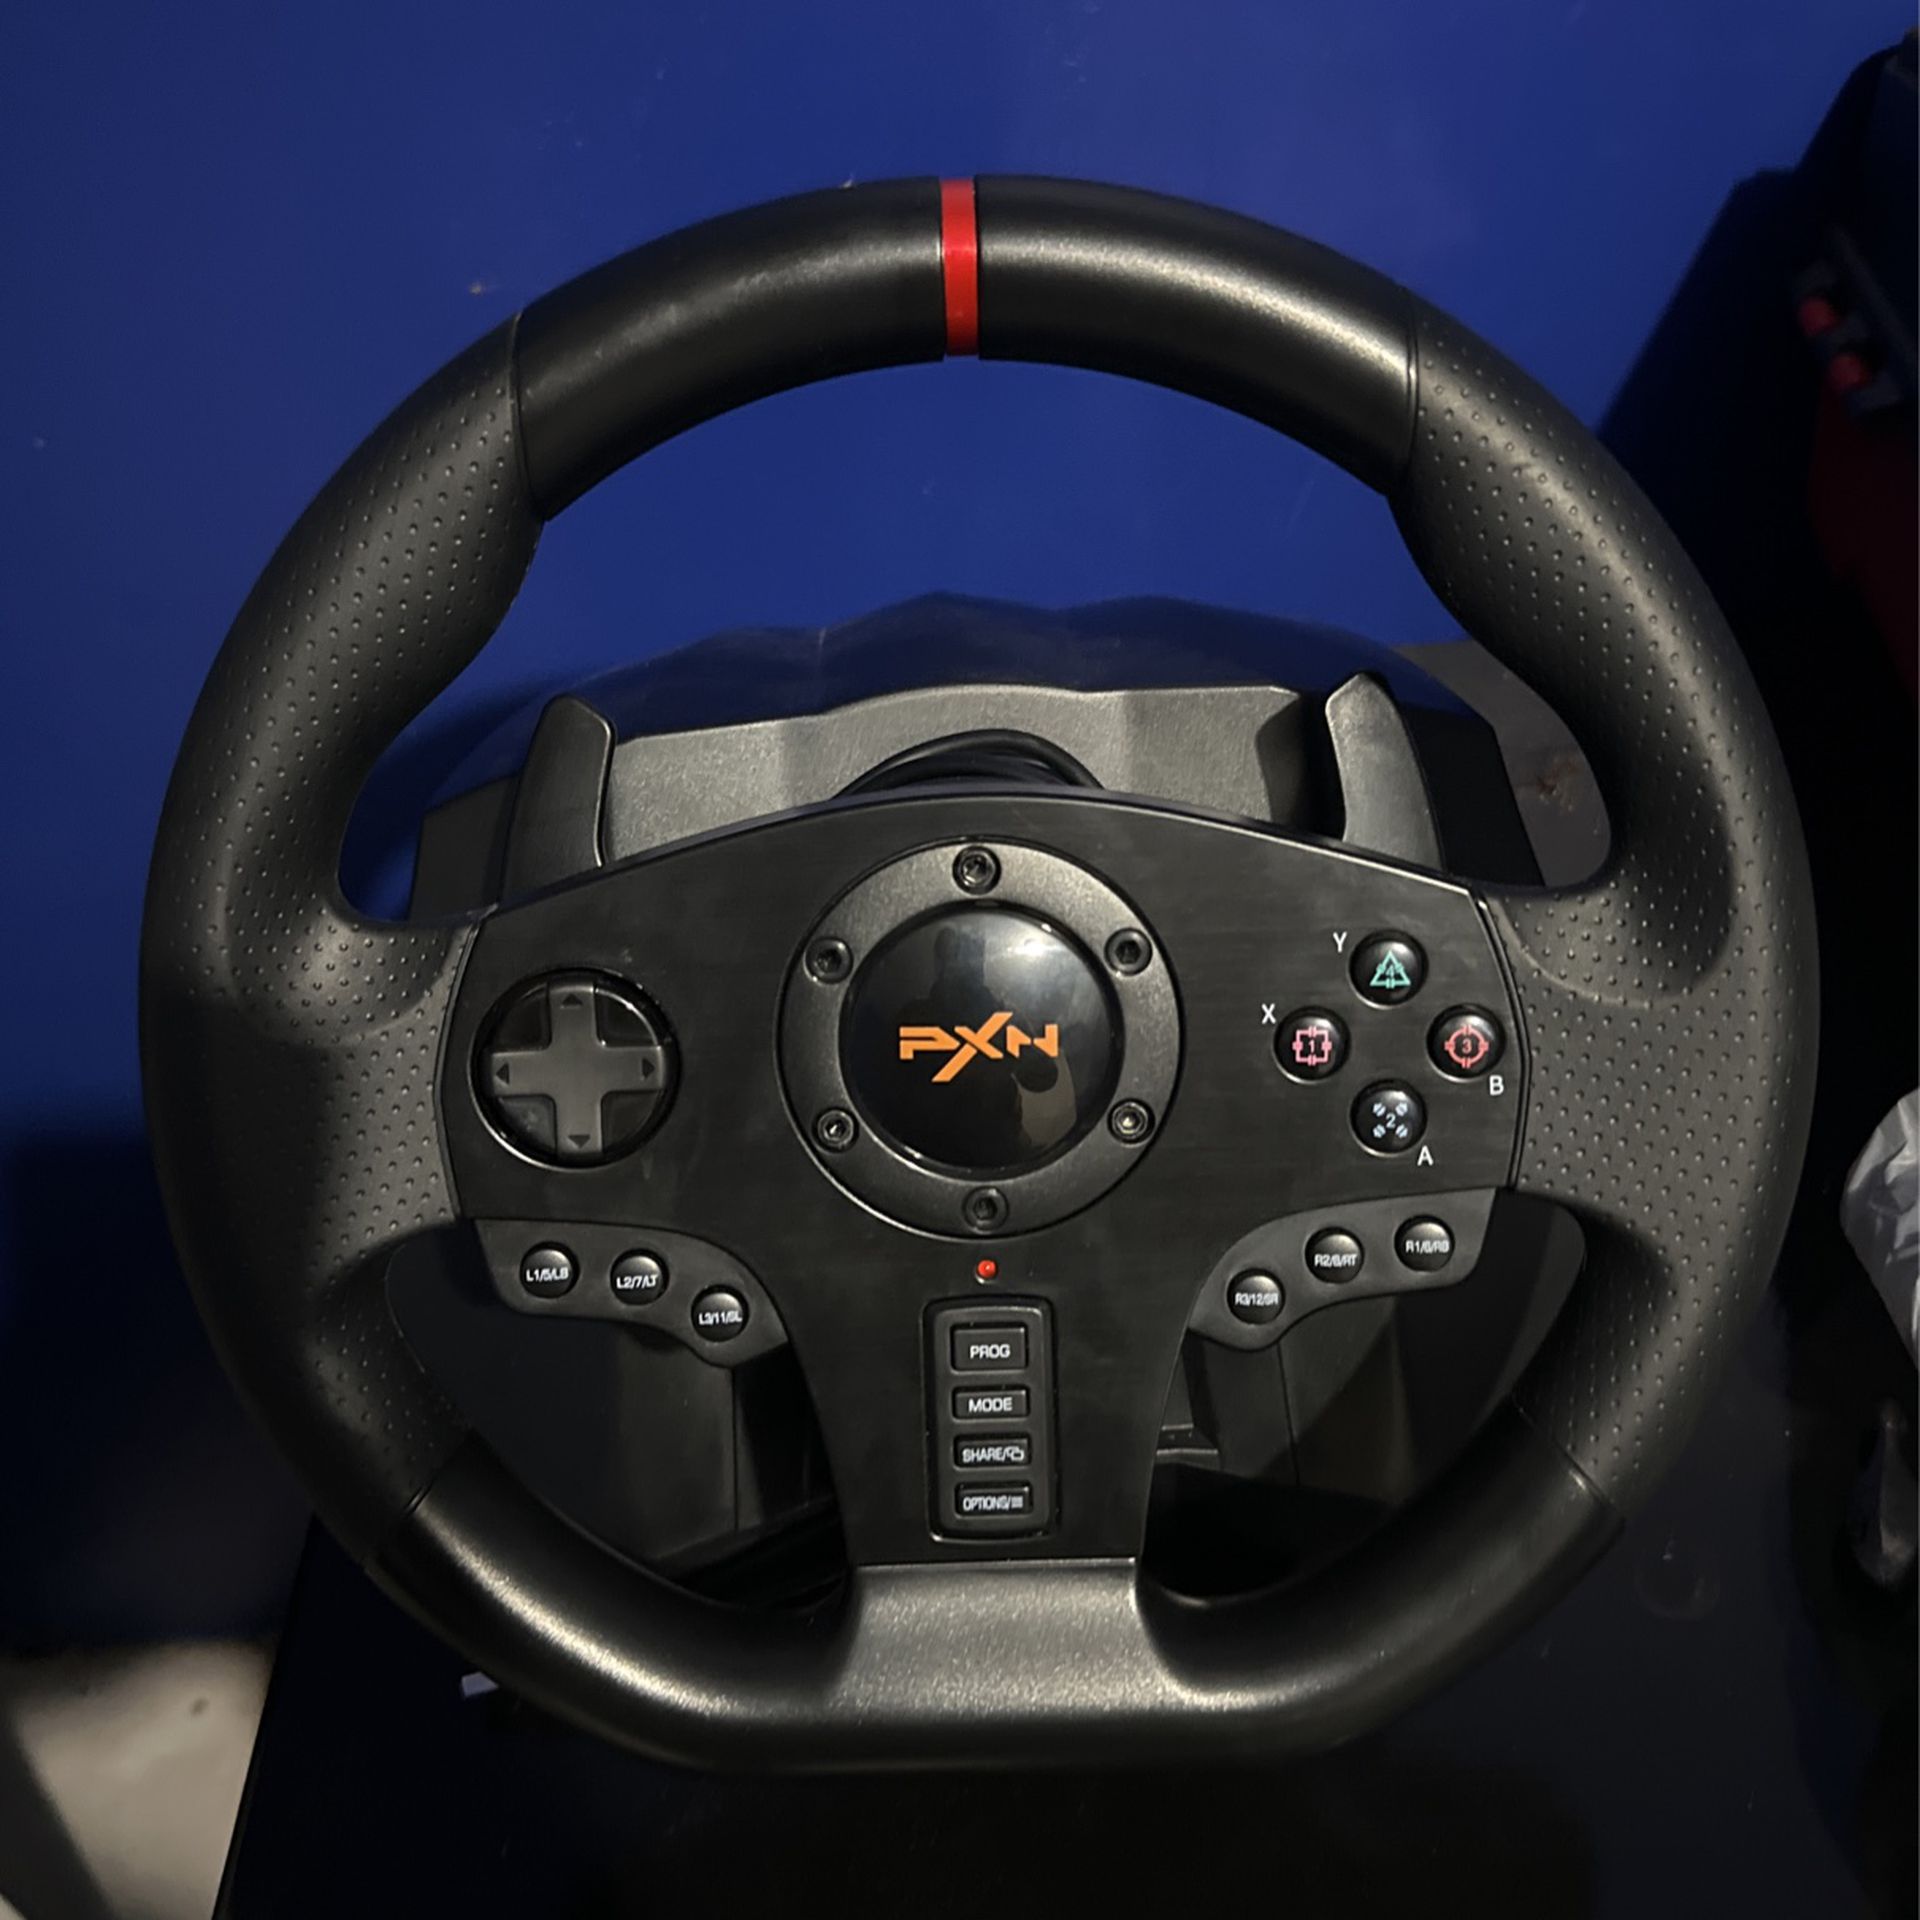 Pxn V900 Racing Wheel For Xbox Send Offers